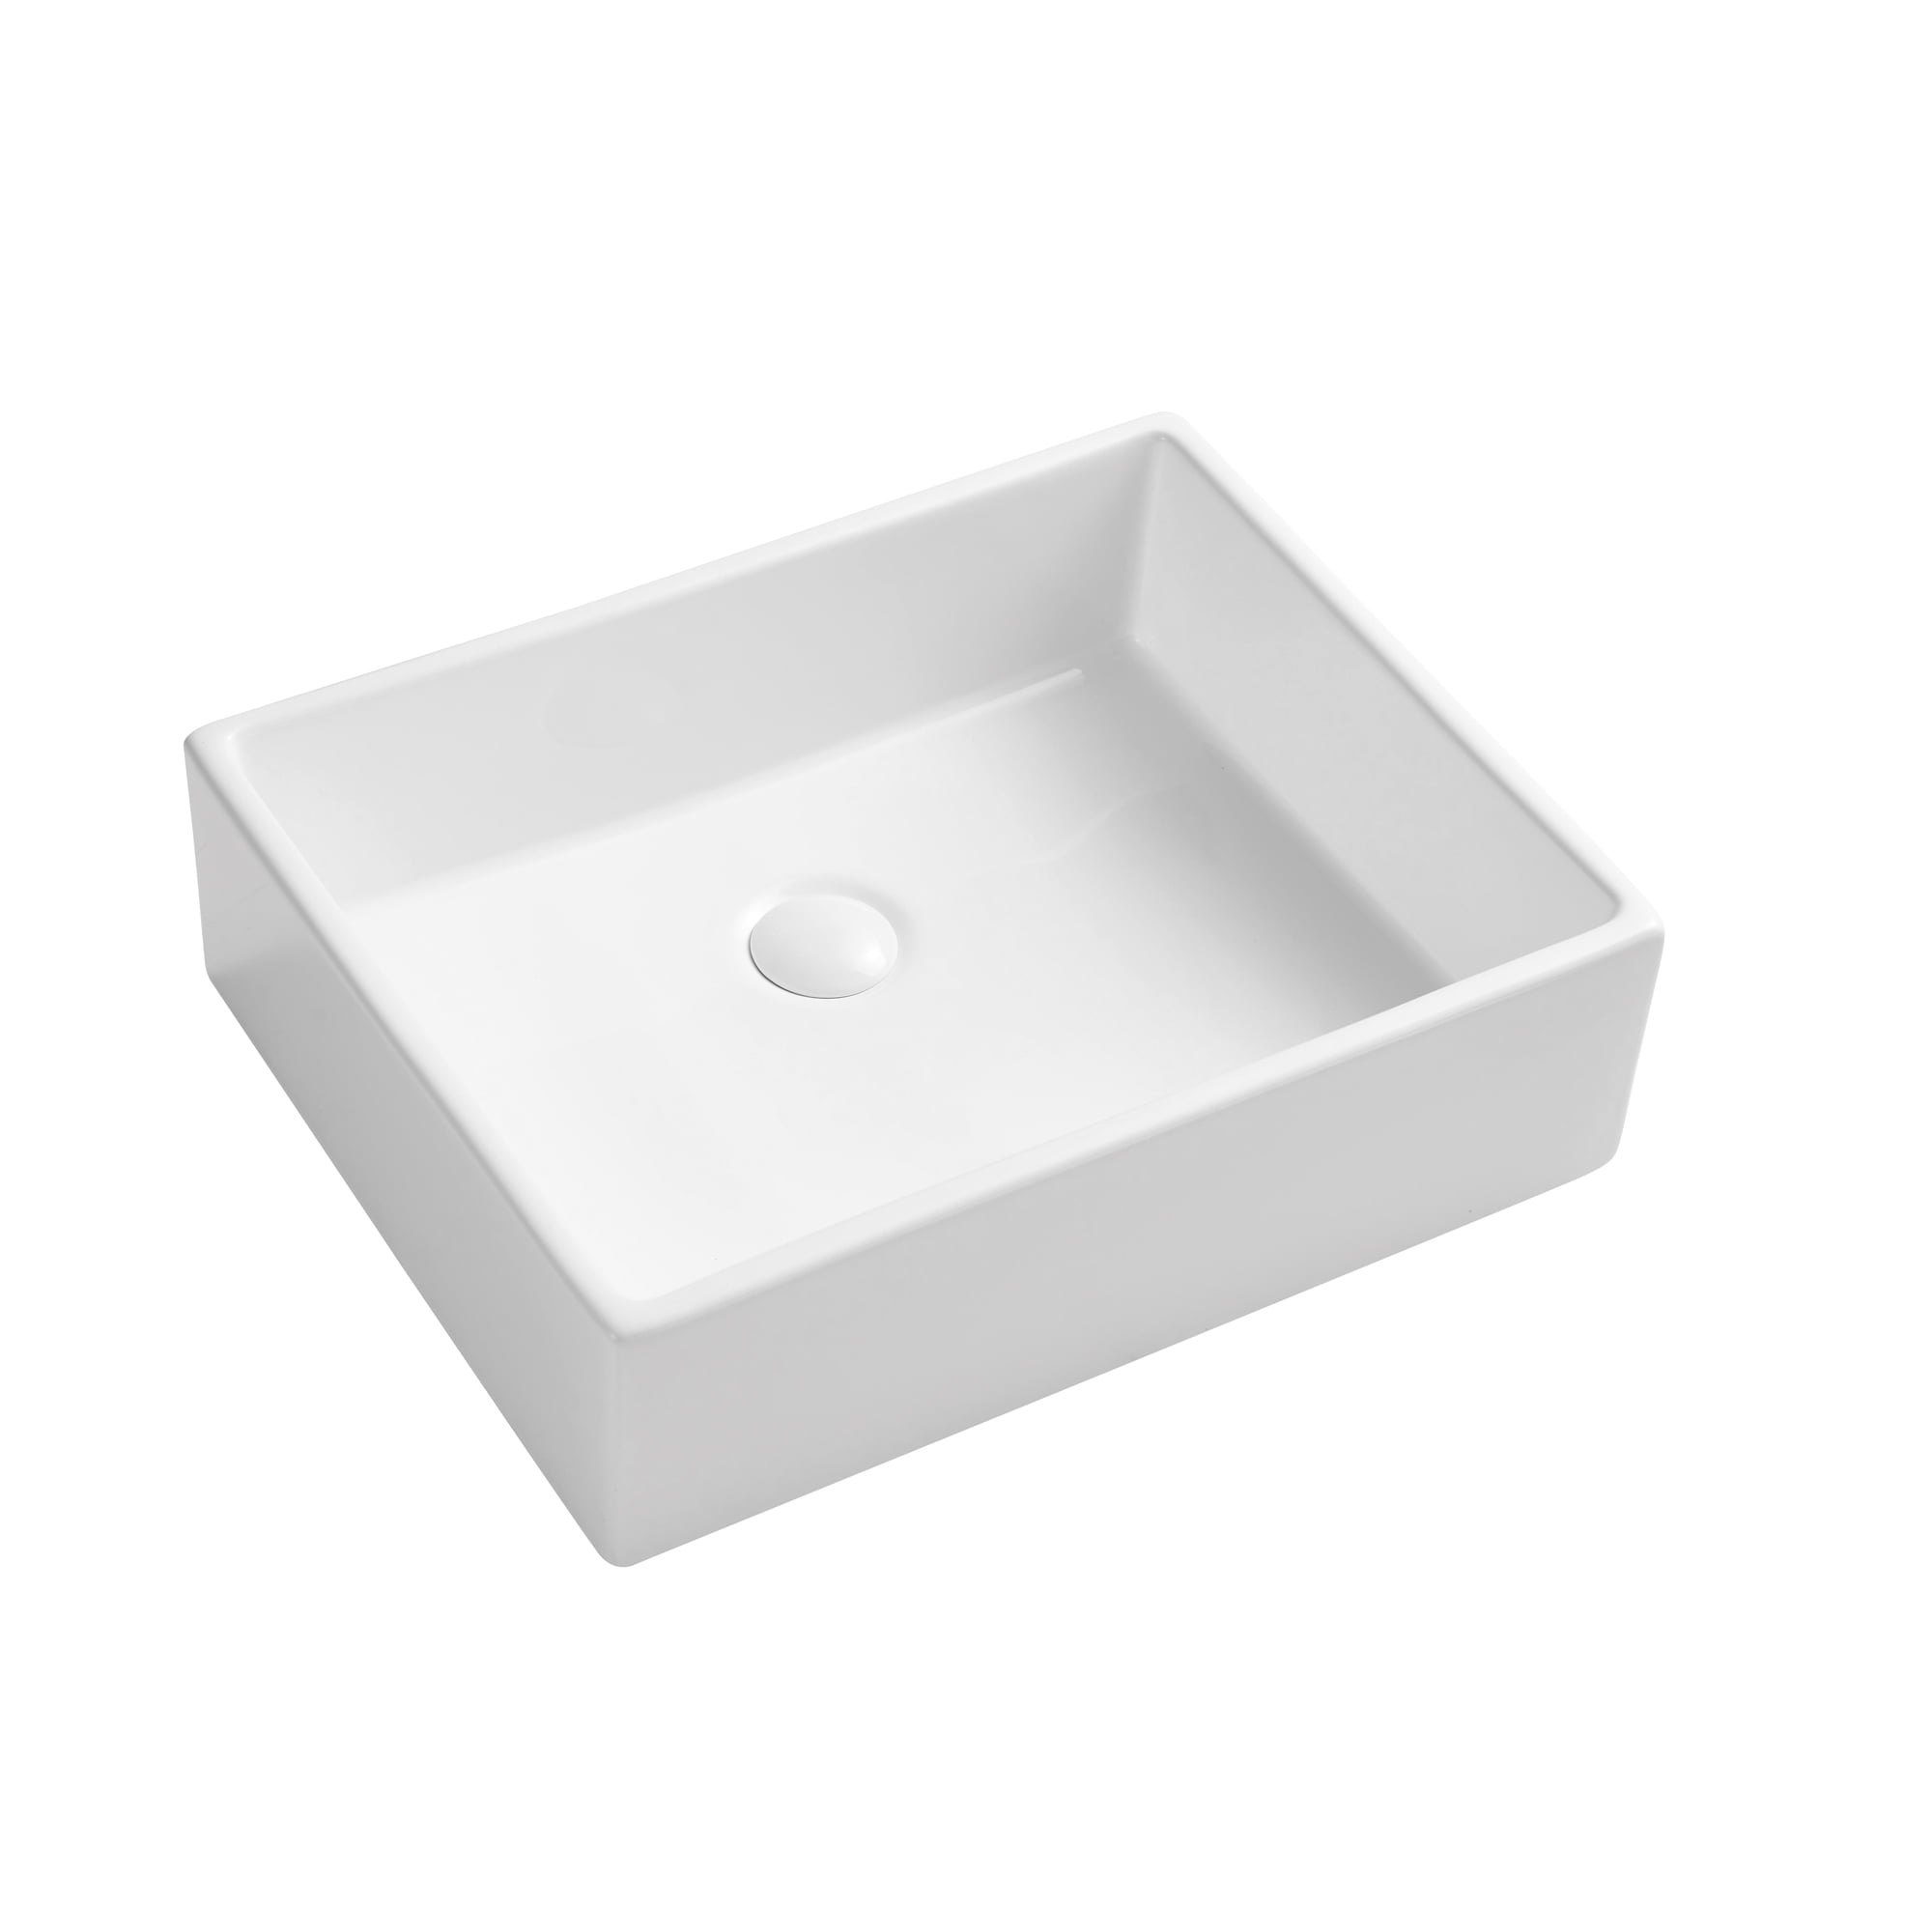 Details about   Bathroom Ceramic Vessel Sink W/ Faucet Pop-up Drain Combo Rectangular White New